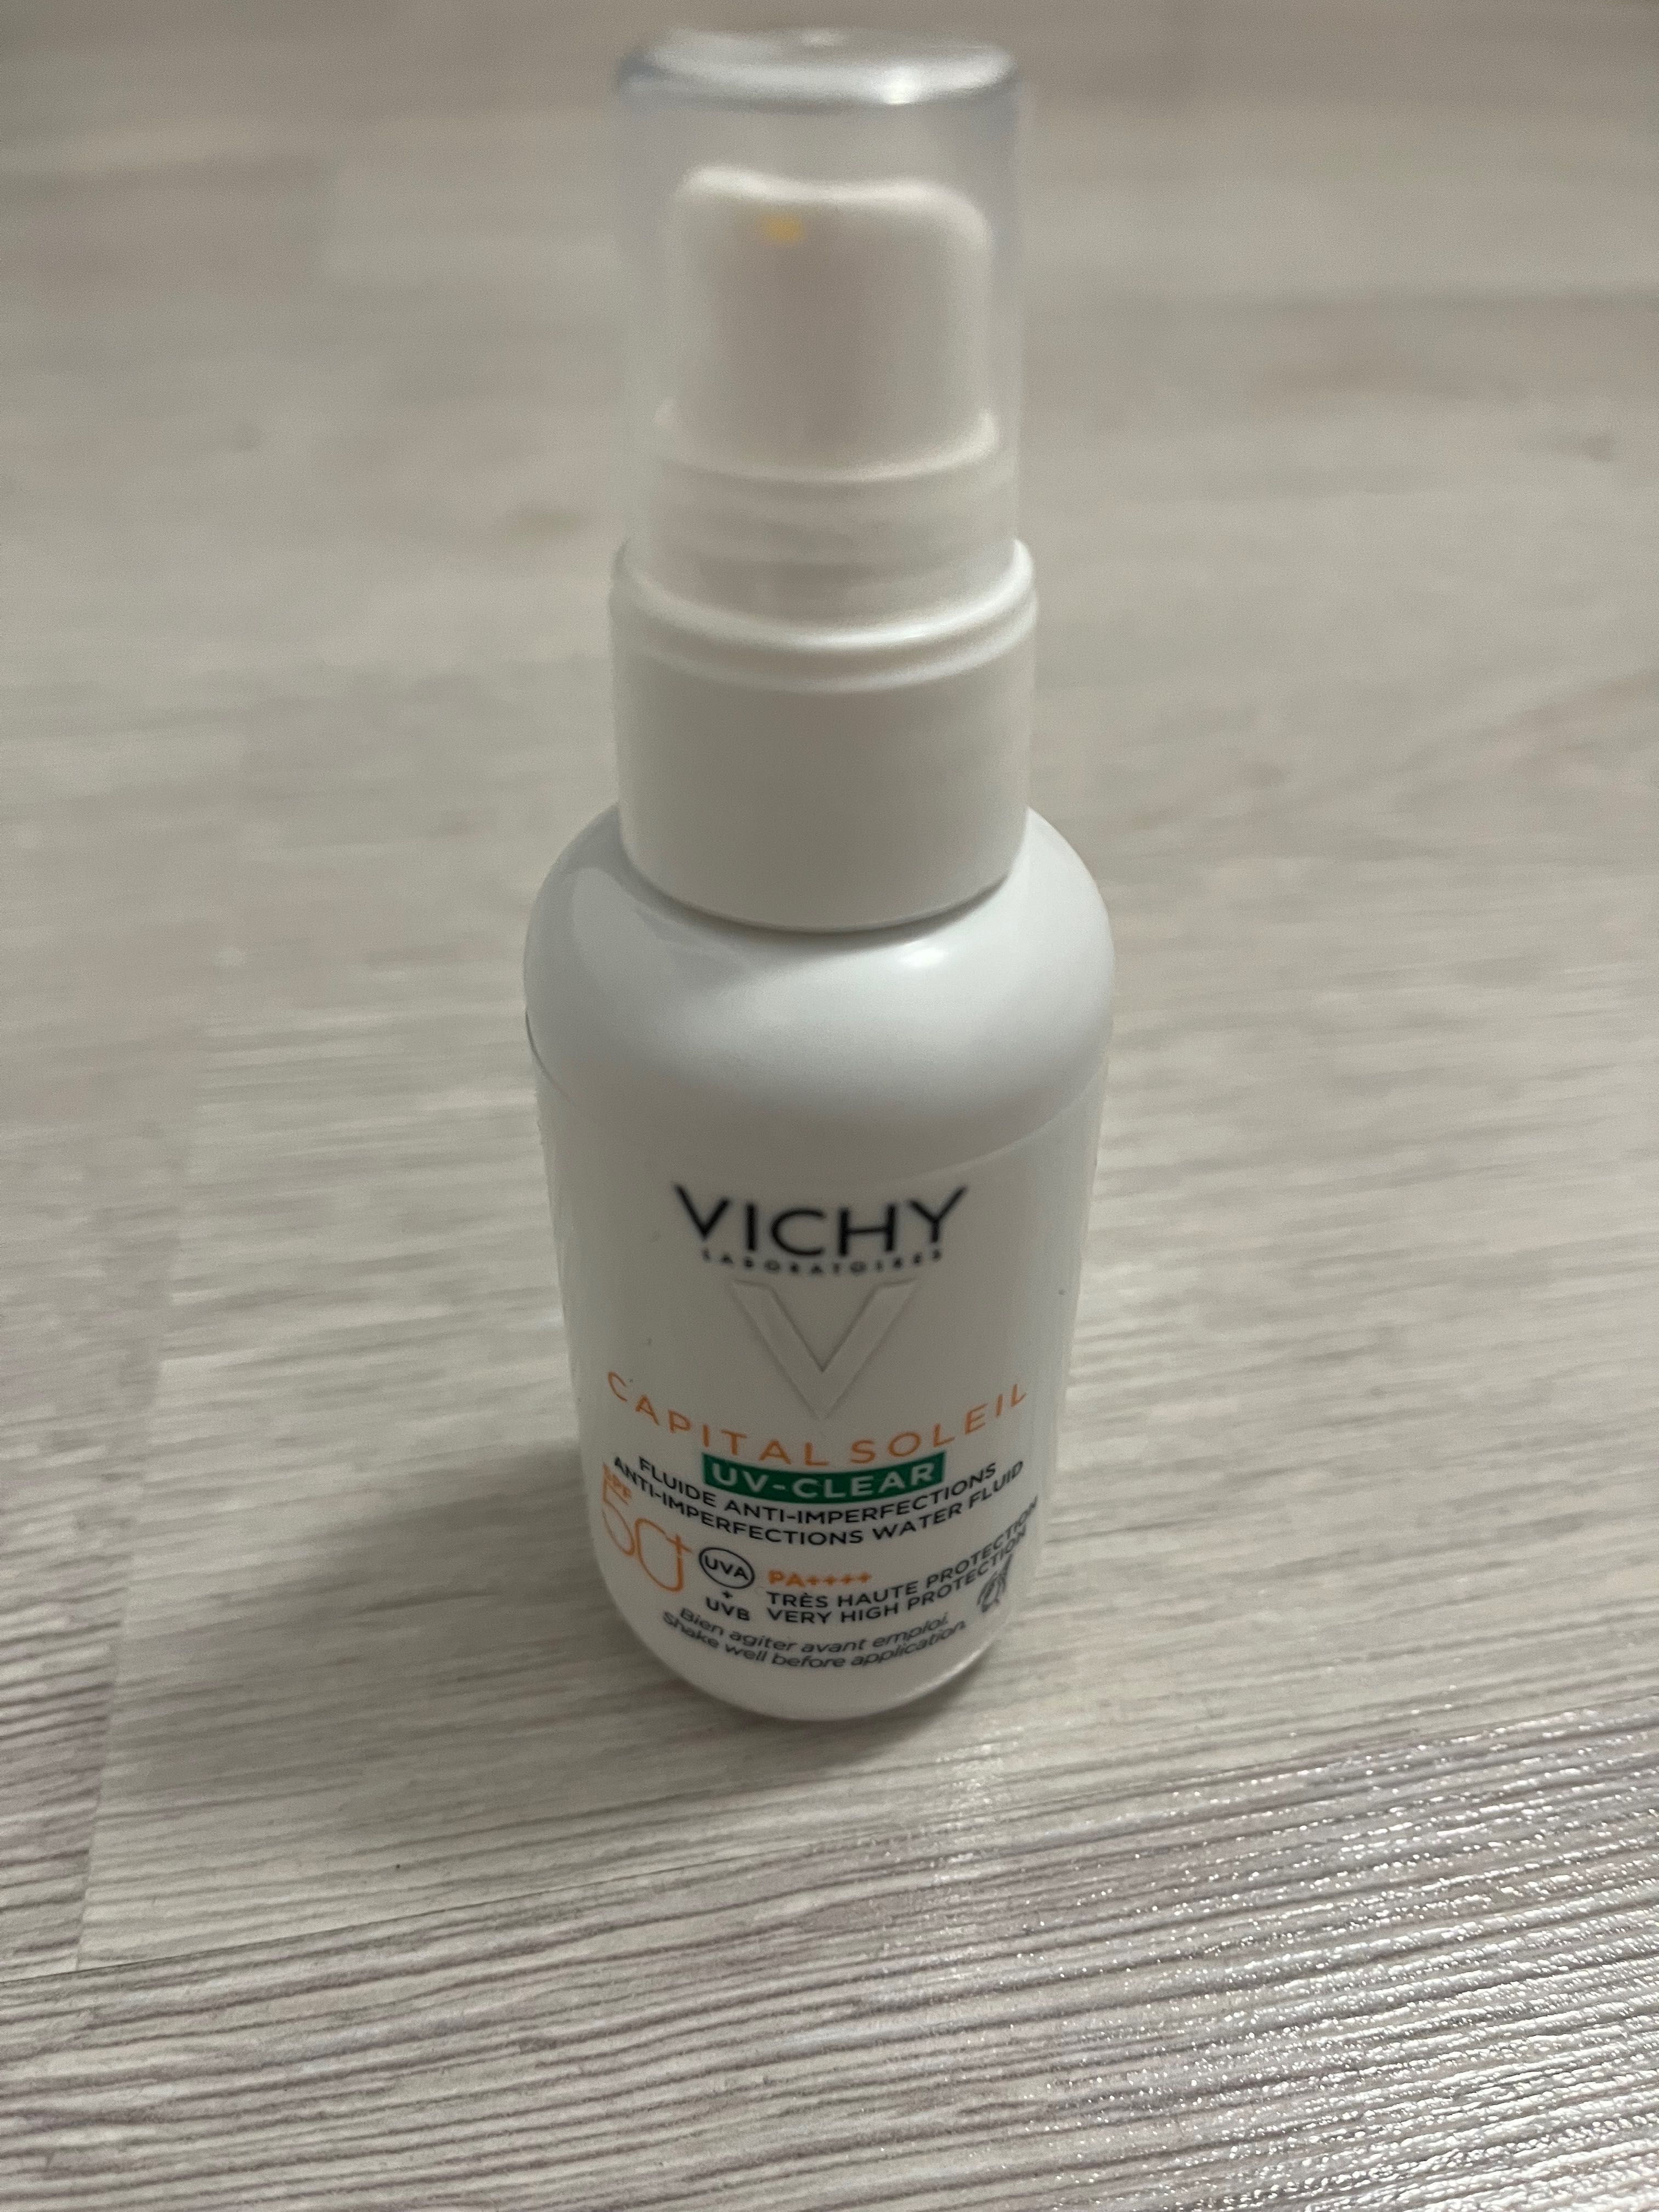 Ser Vichy Capital Soleil SPF50+ fluid antiimperfectiuni 40 ml